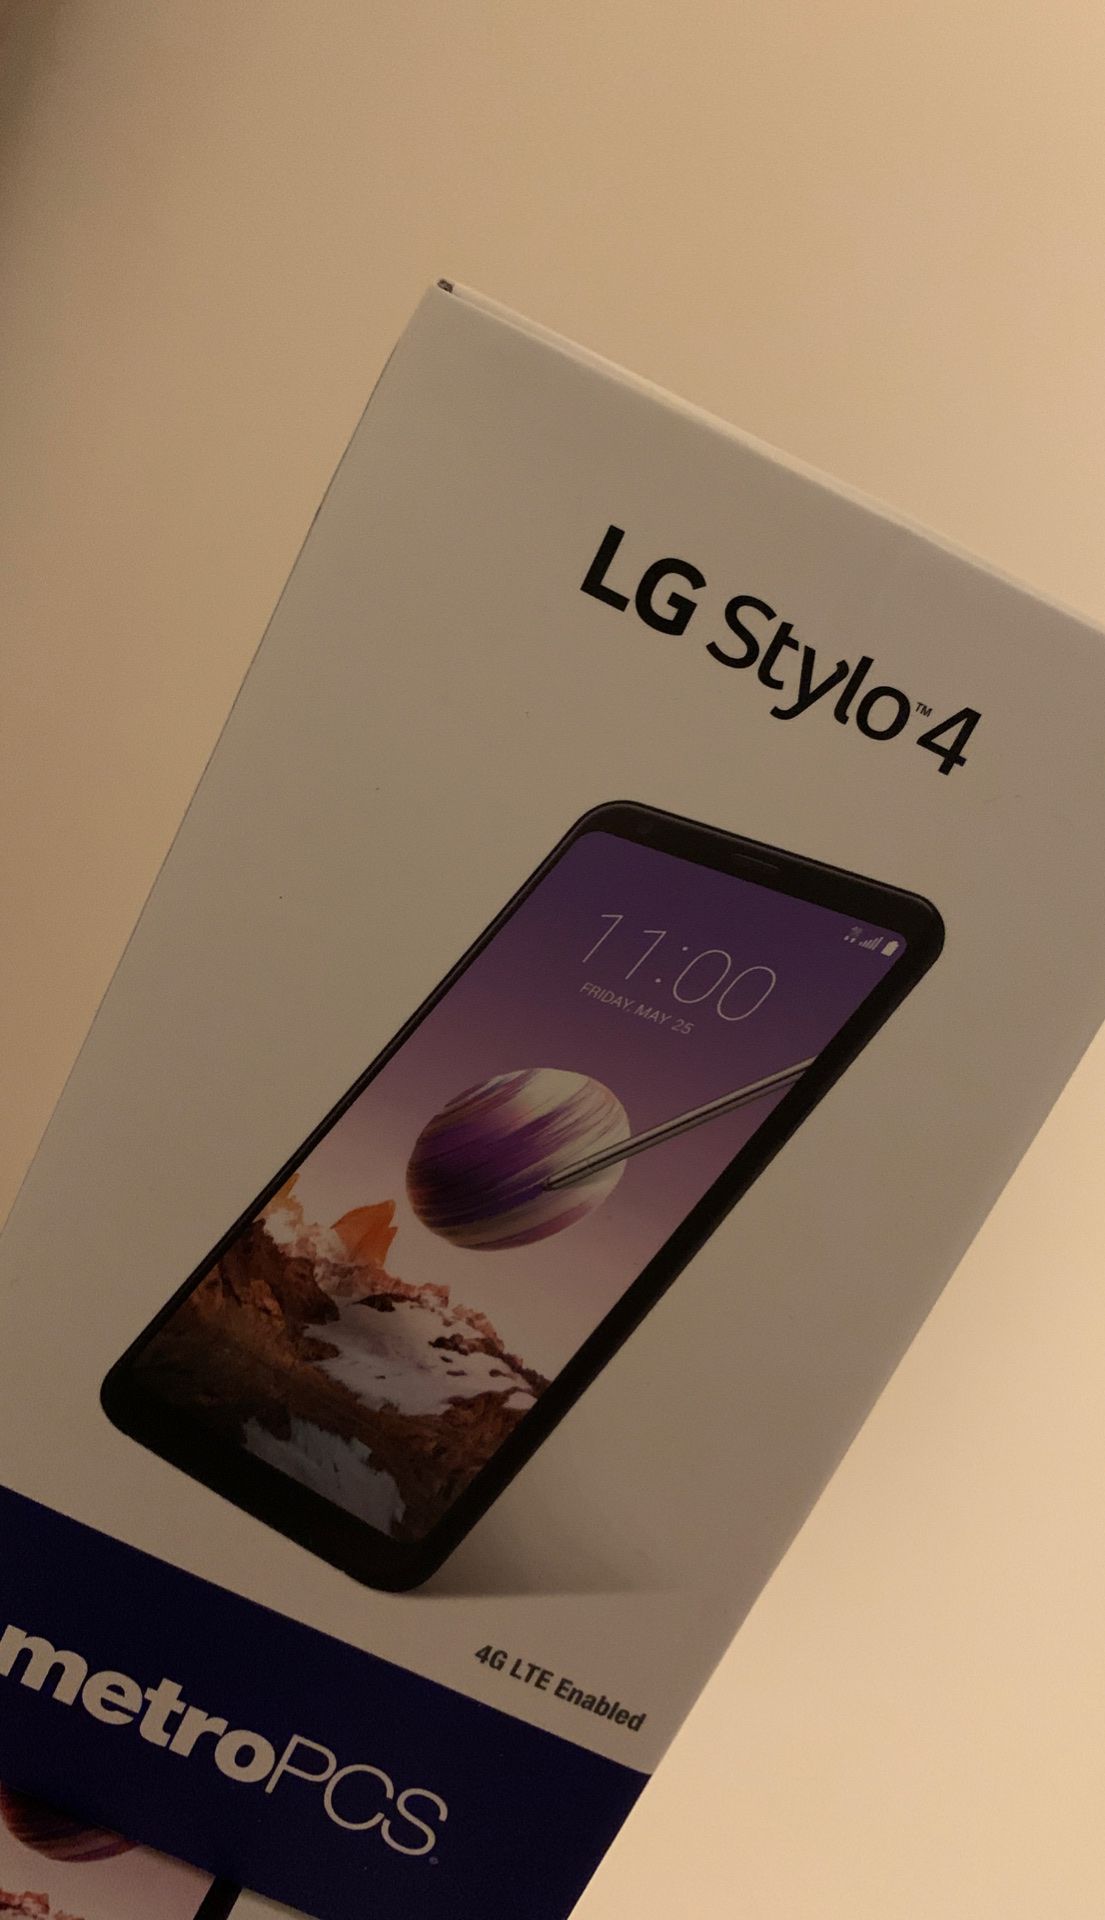 LG STYLO 4 unlocked